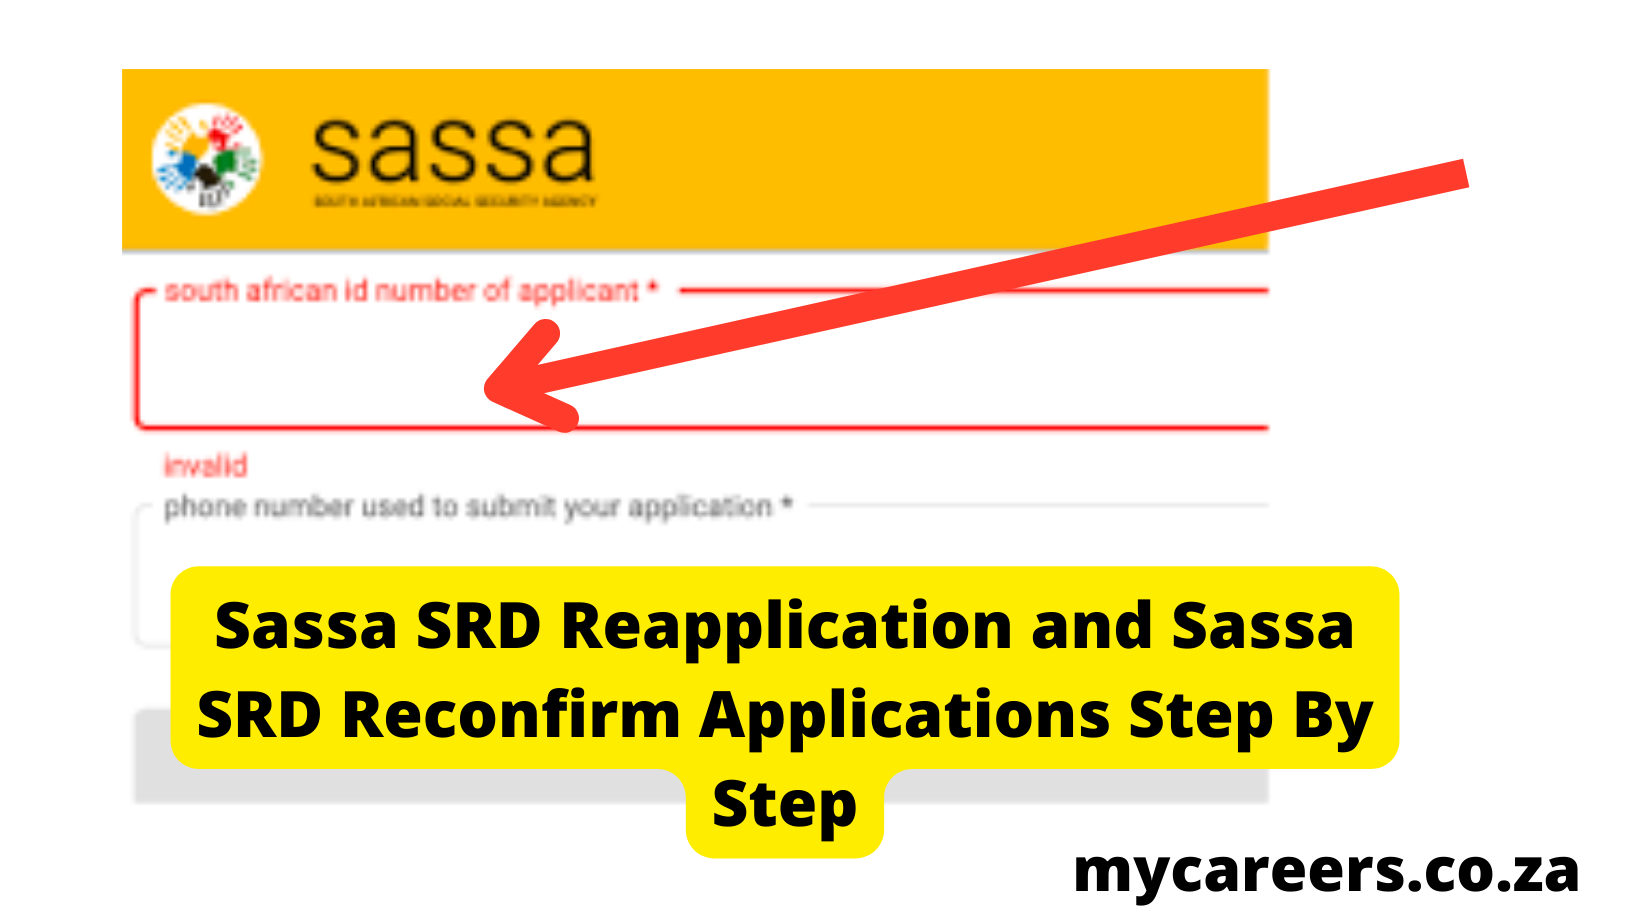 Sassa SRD Reapplication and Sassa SRD Reconfirm Applications Step By Step